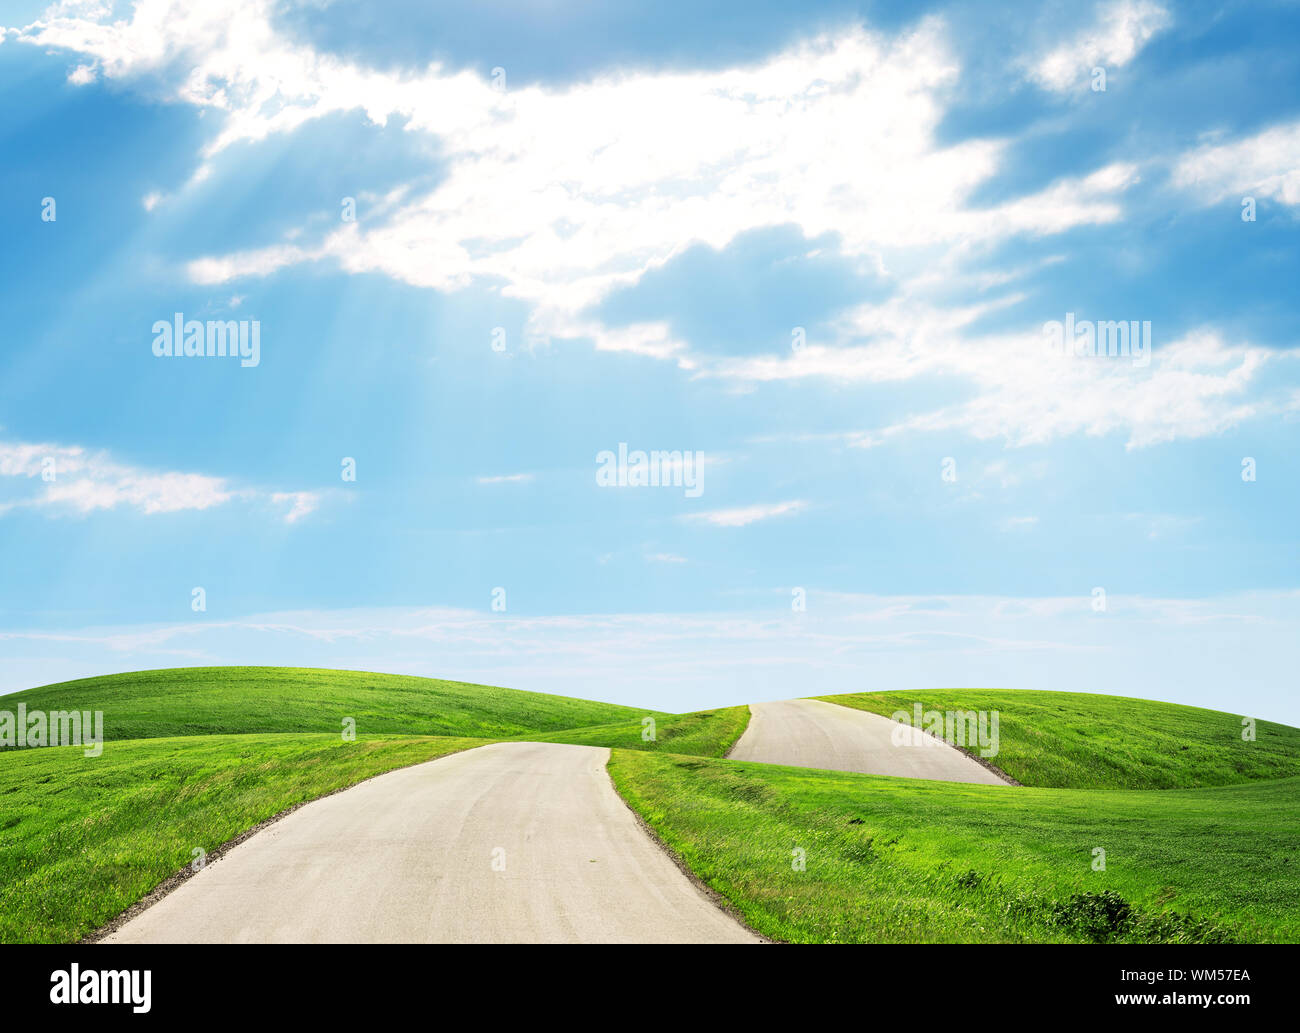 Straße durch grüne Hügel in Richtung horison Stockfoto